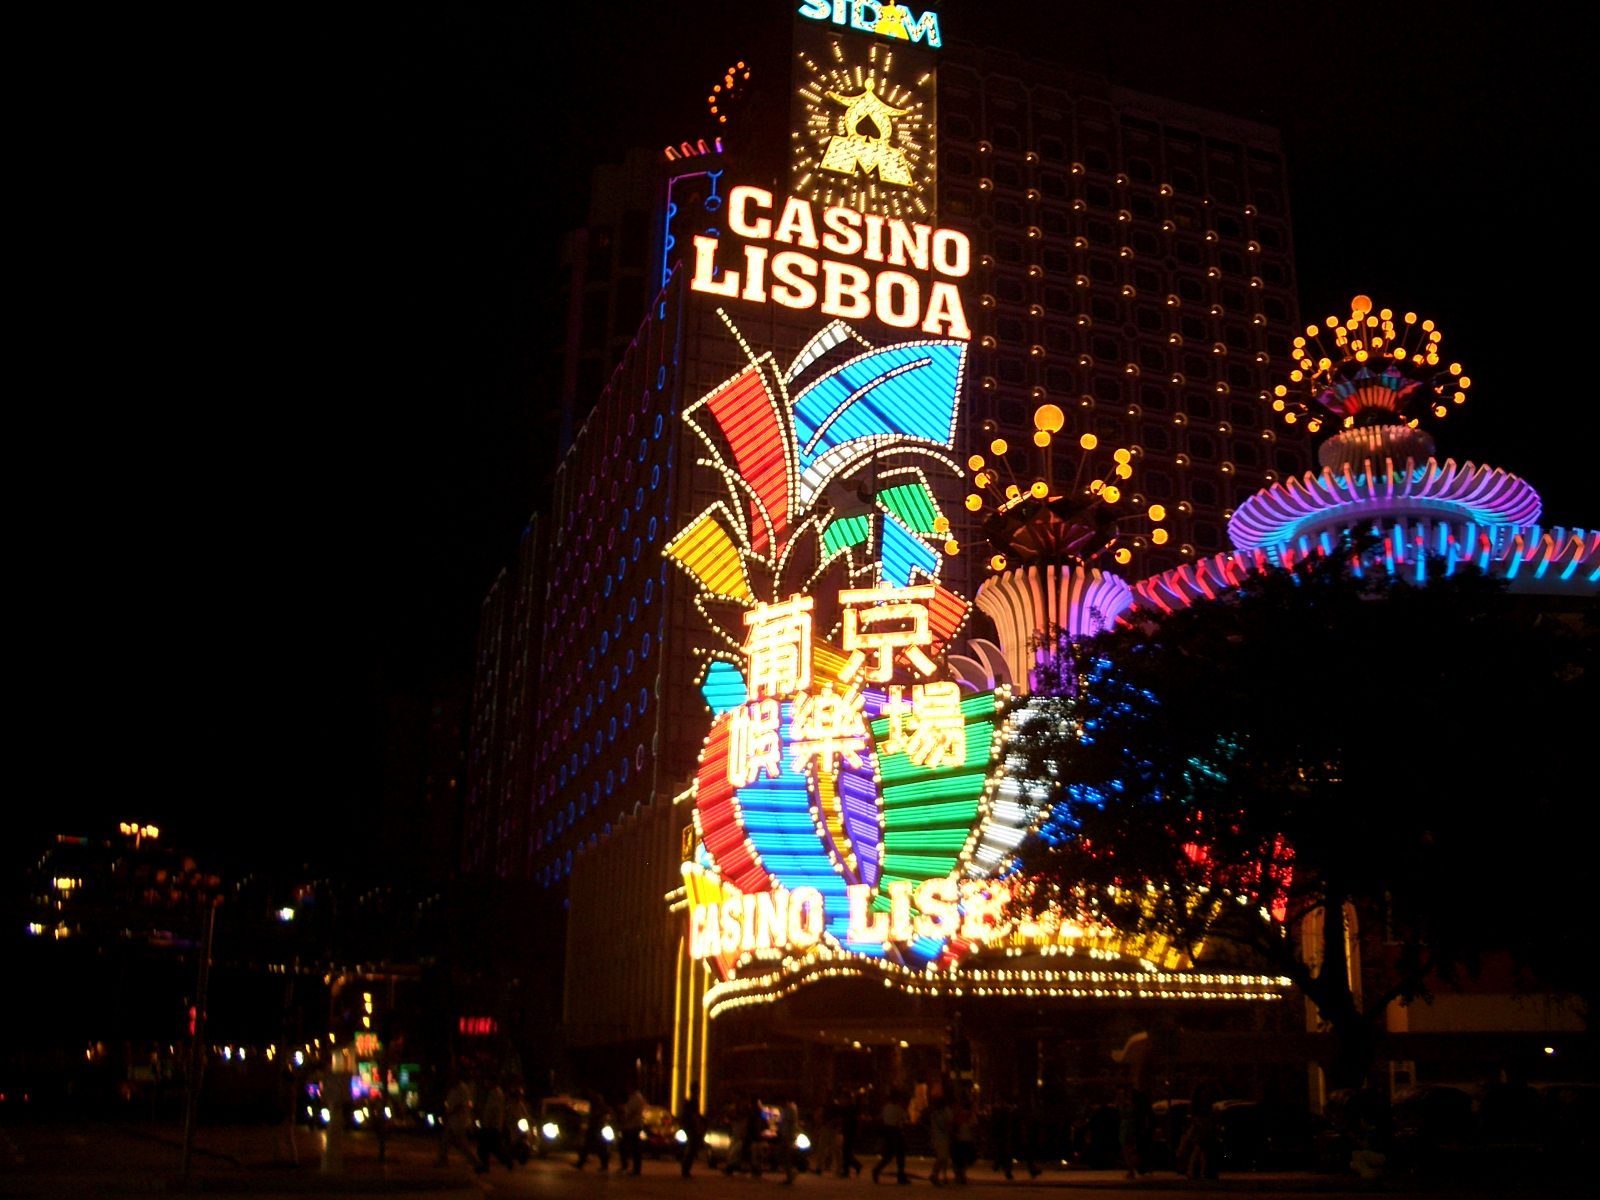 Macau-Casino-Lisboa-at-night-0828.jpg